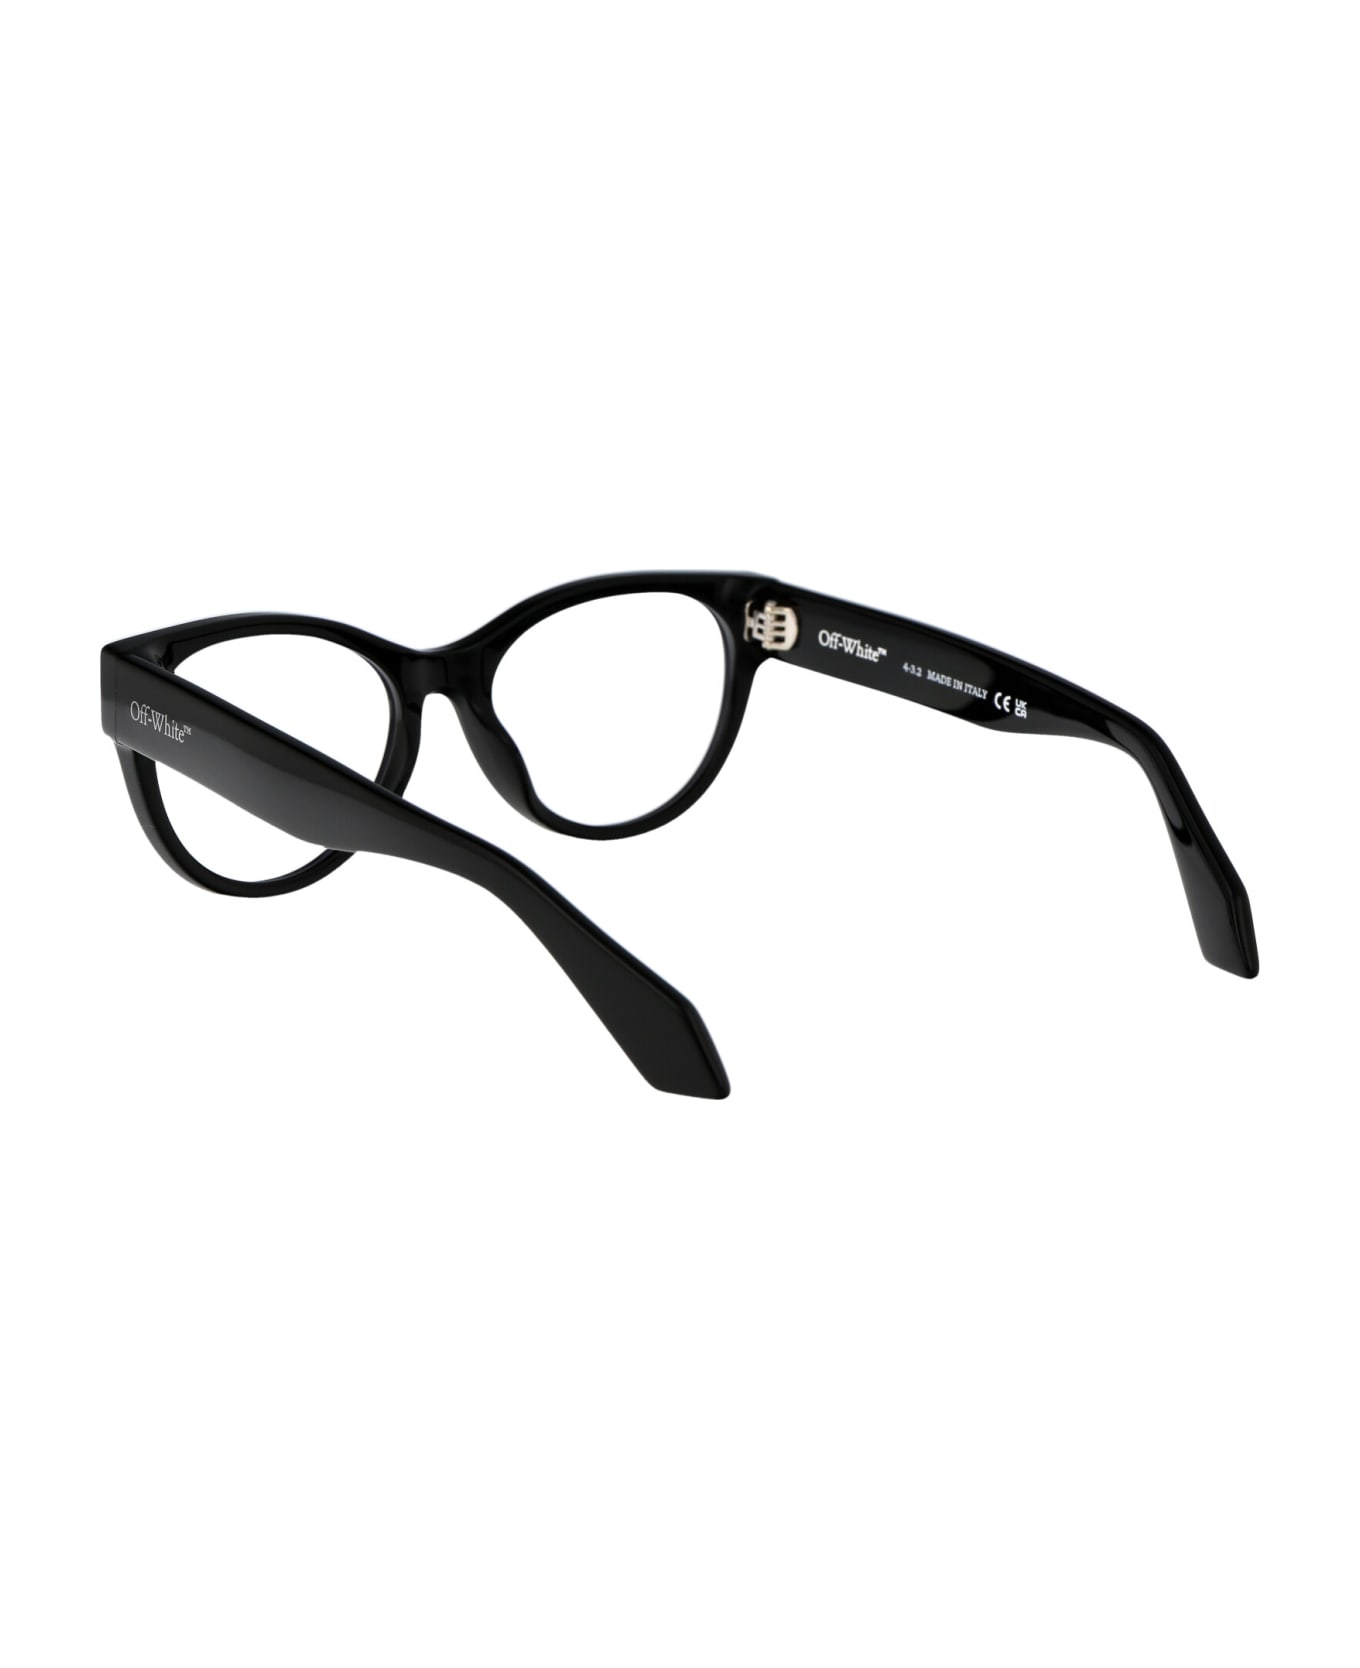 Off-White Optical Style 57 Glasses - 1000 BLACK